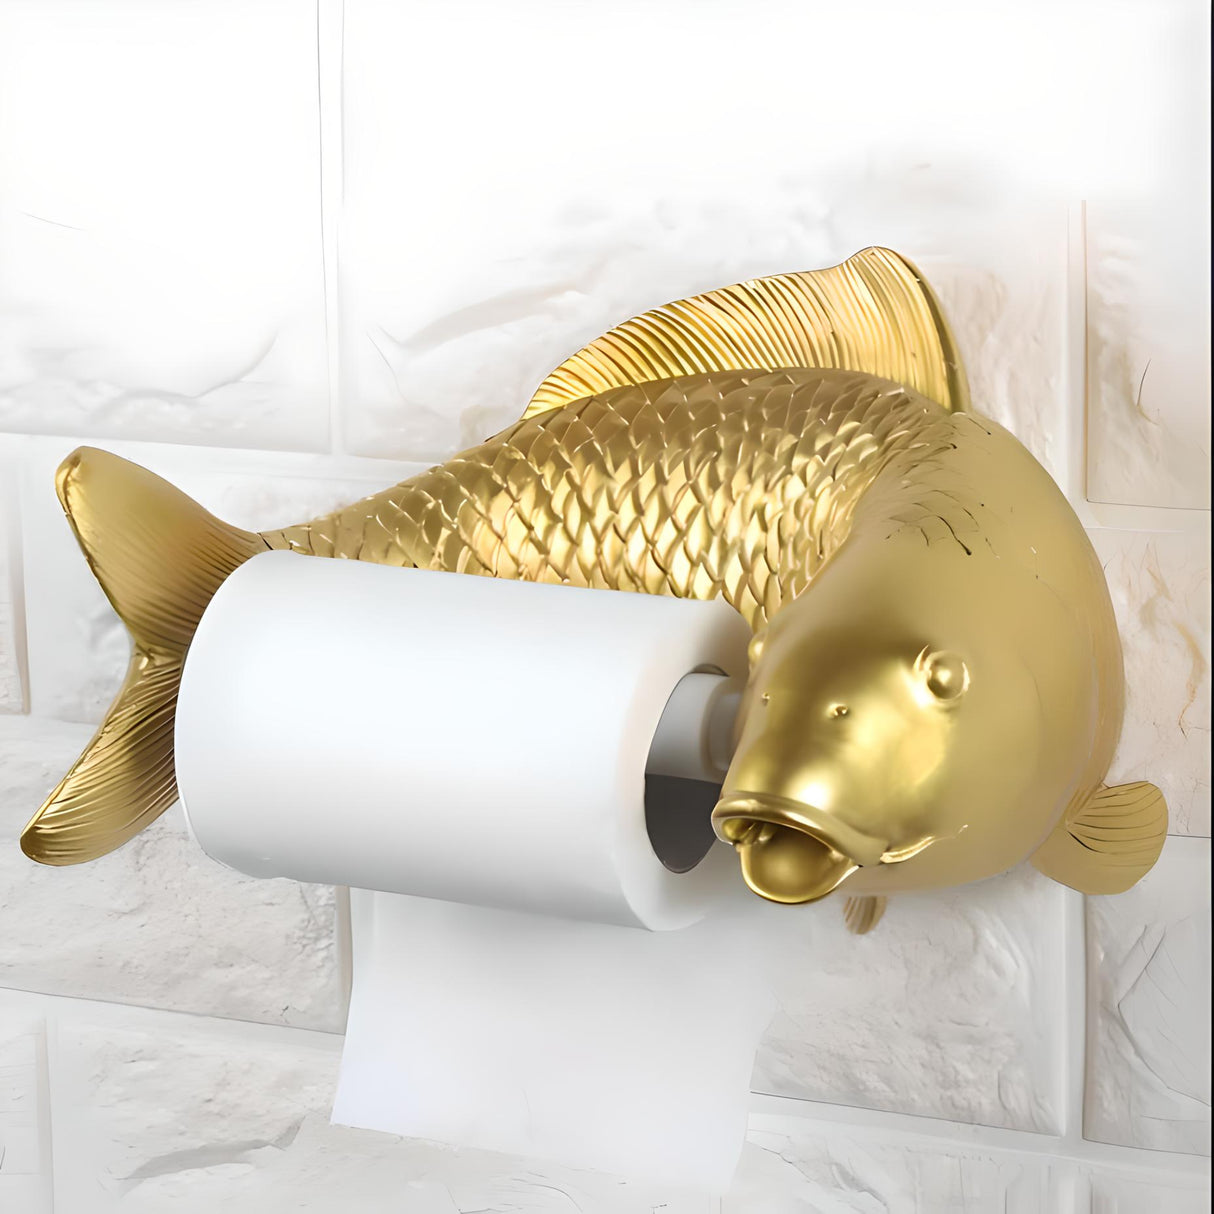 Gold Fish Creative Toilet Paper Roll Holder toilet paper holder Julia M Home & Kitchen Gold  